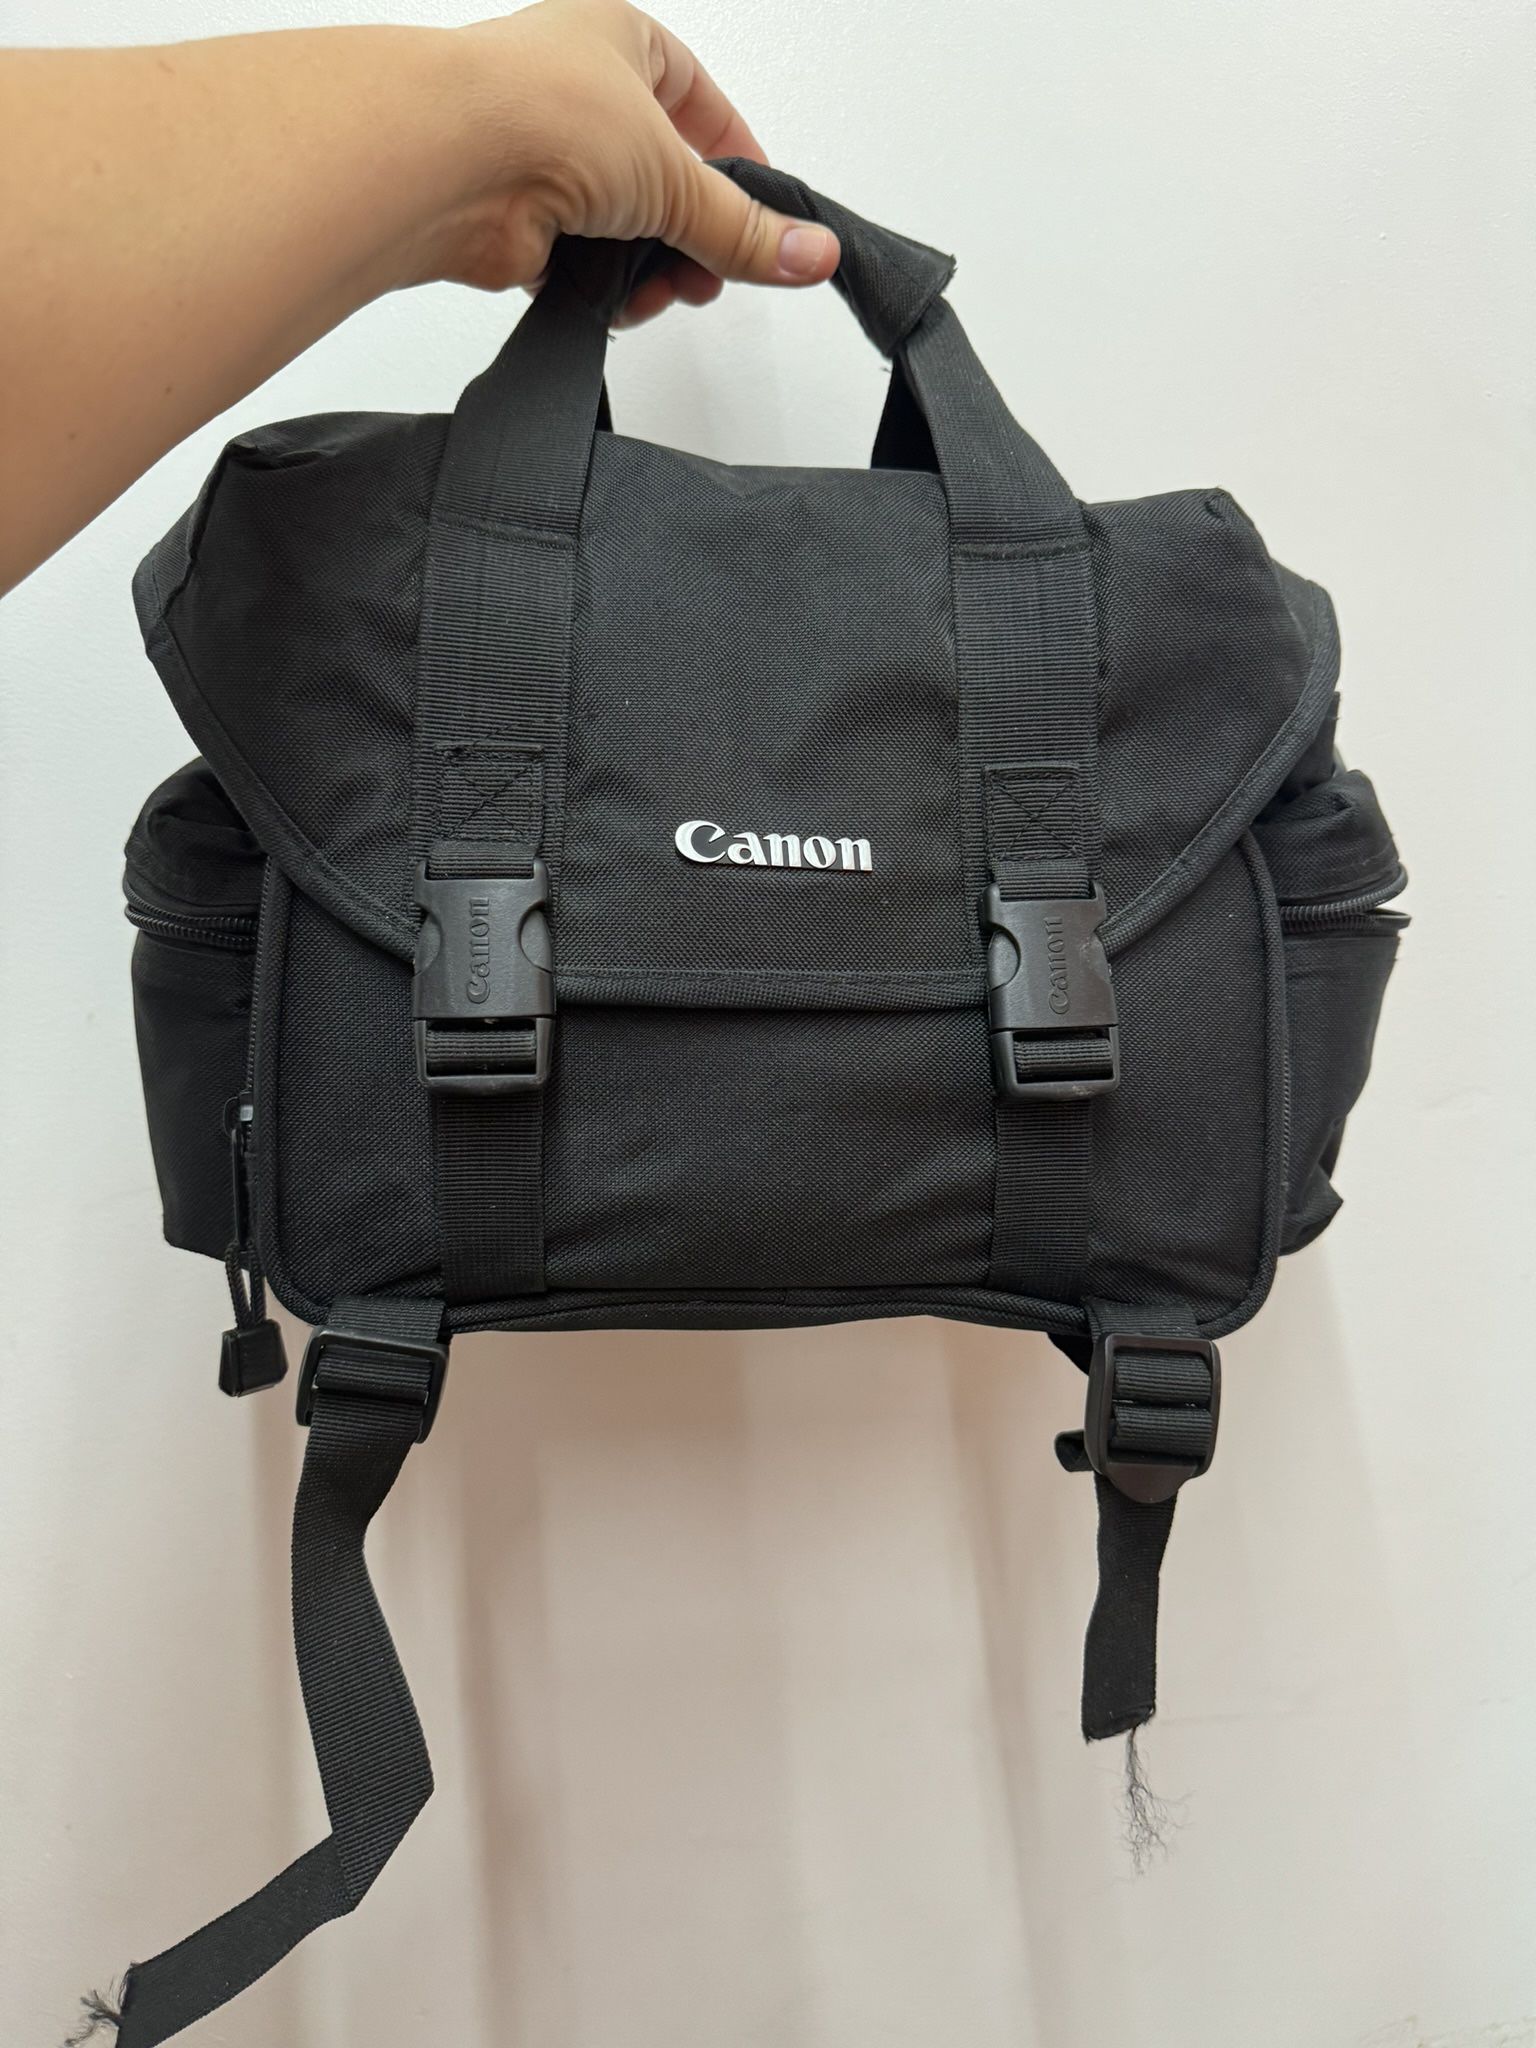 Canon photo bag, excellent condition